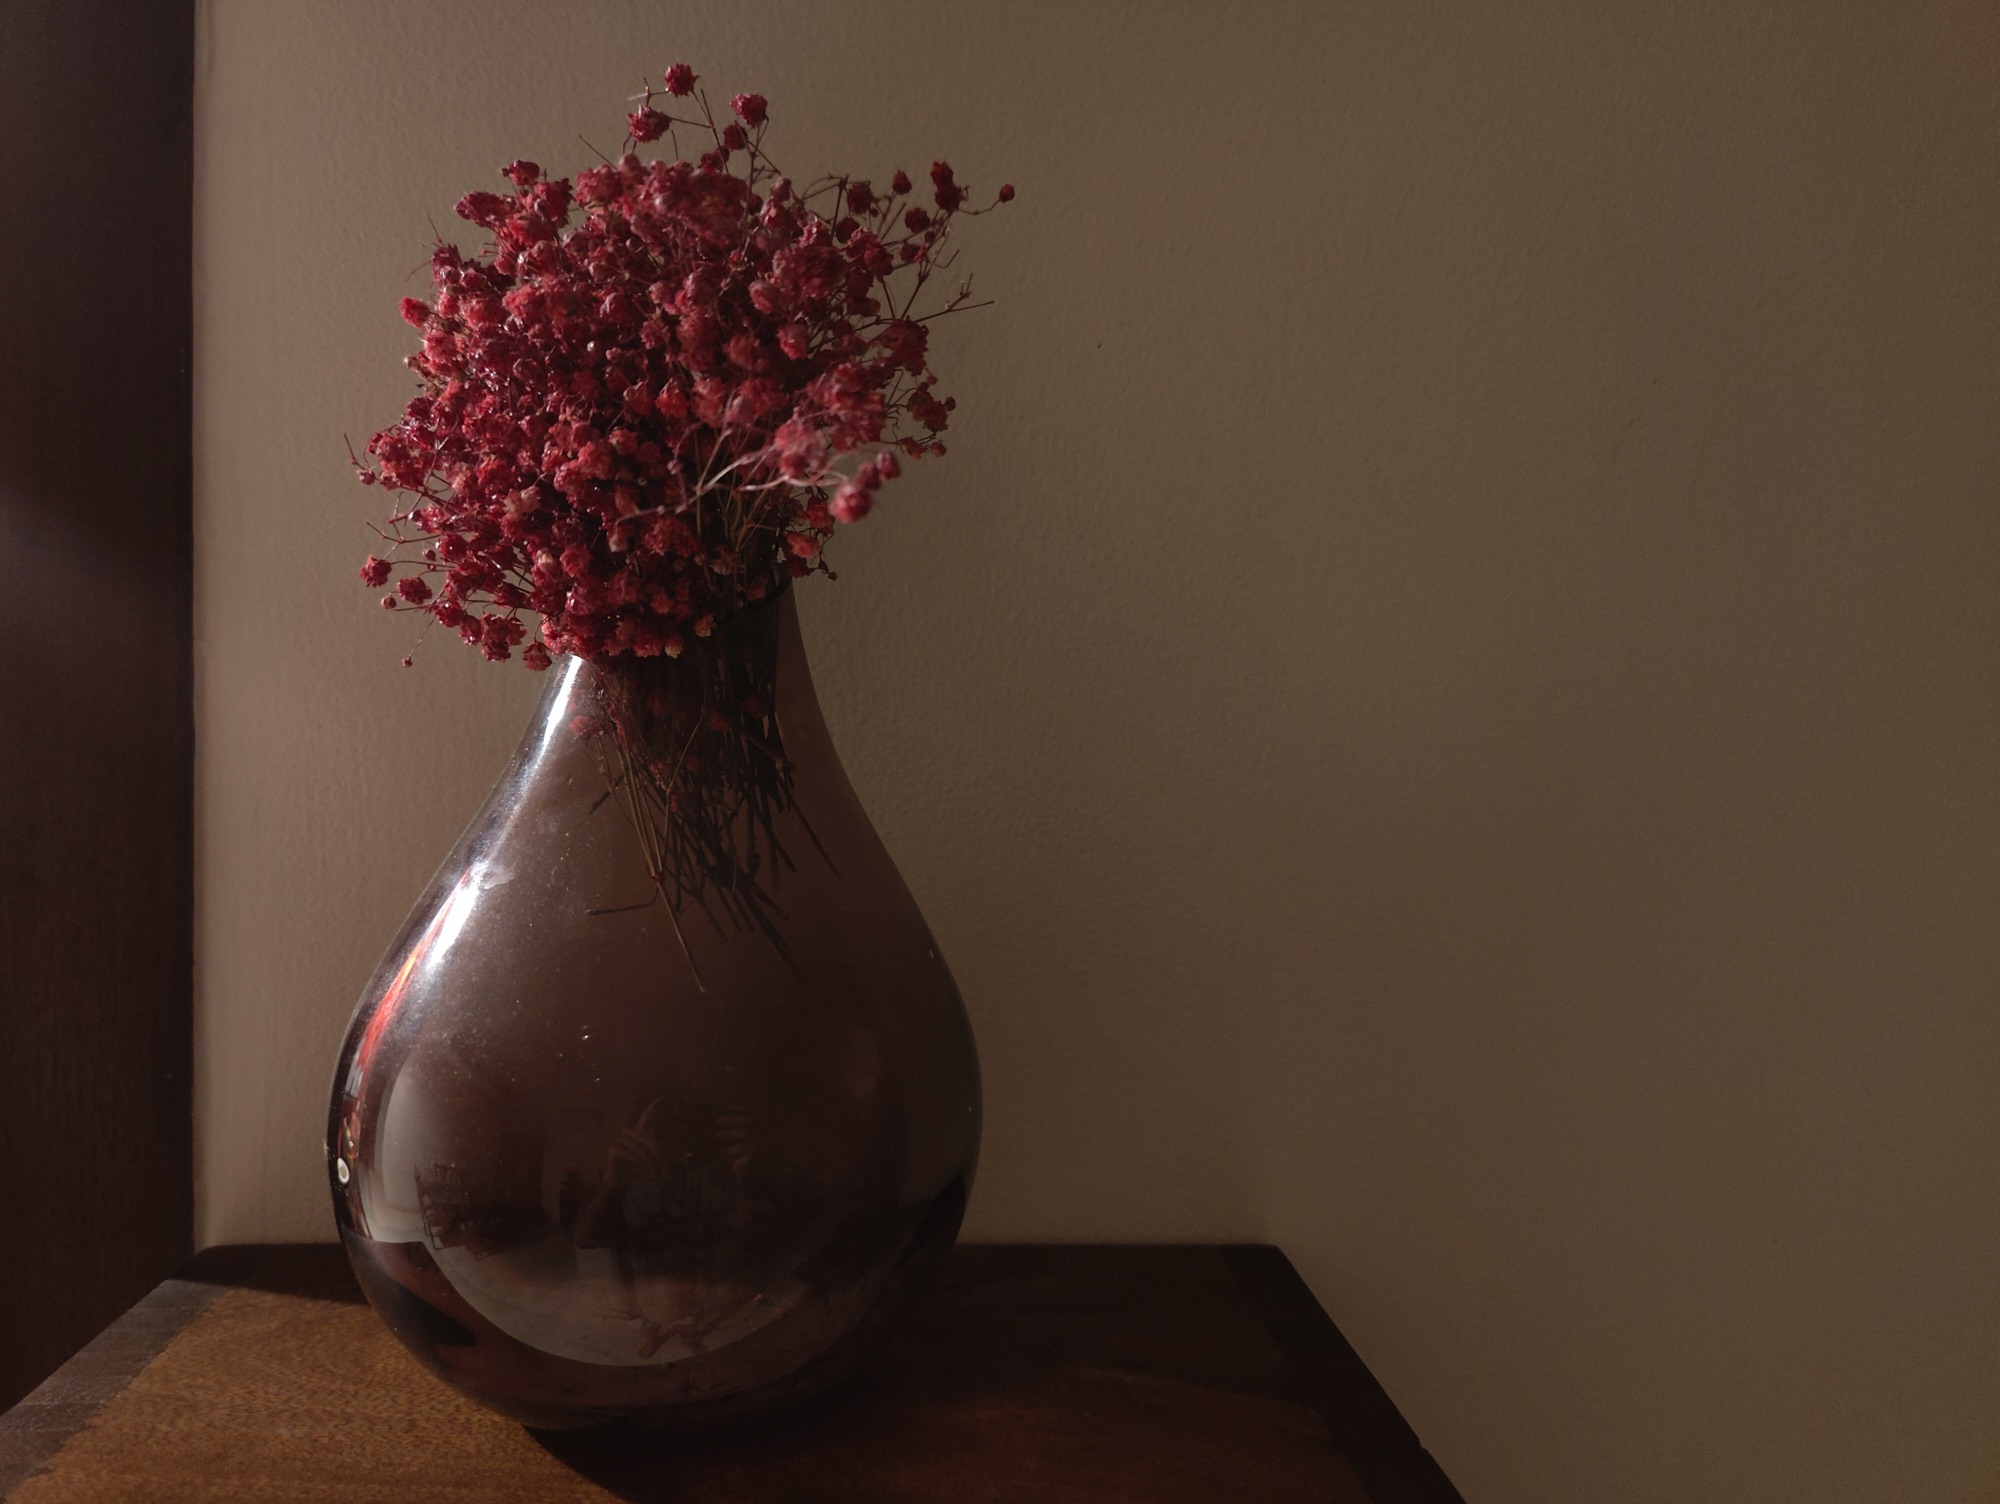 OnePlus 10 Pro camera sample indoor low light shot of a vase